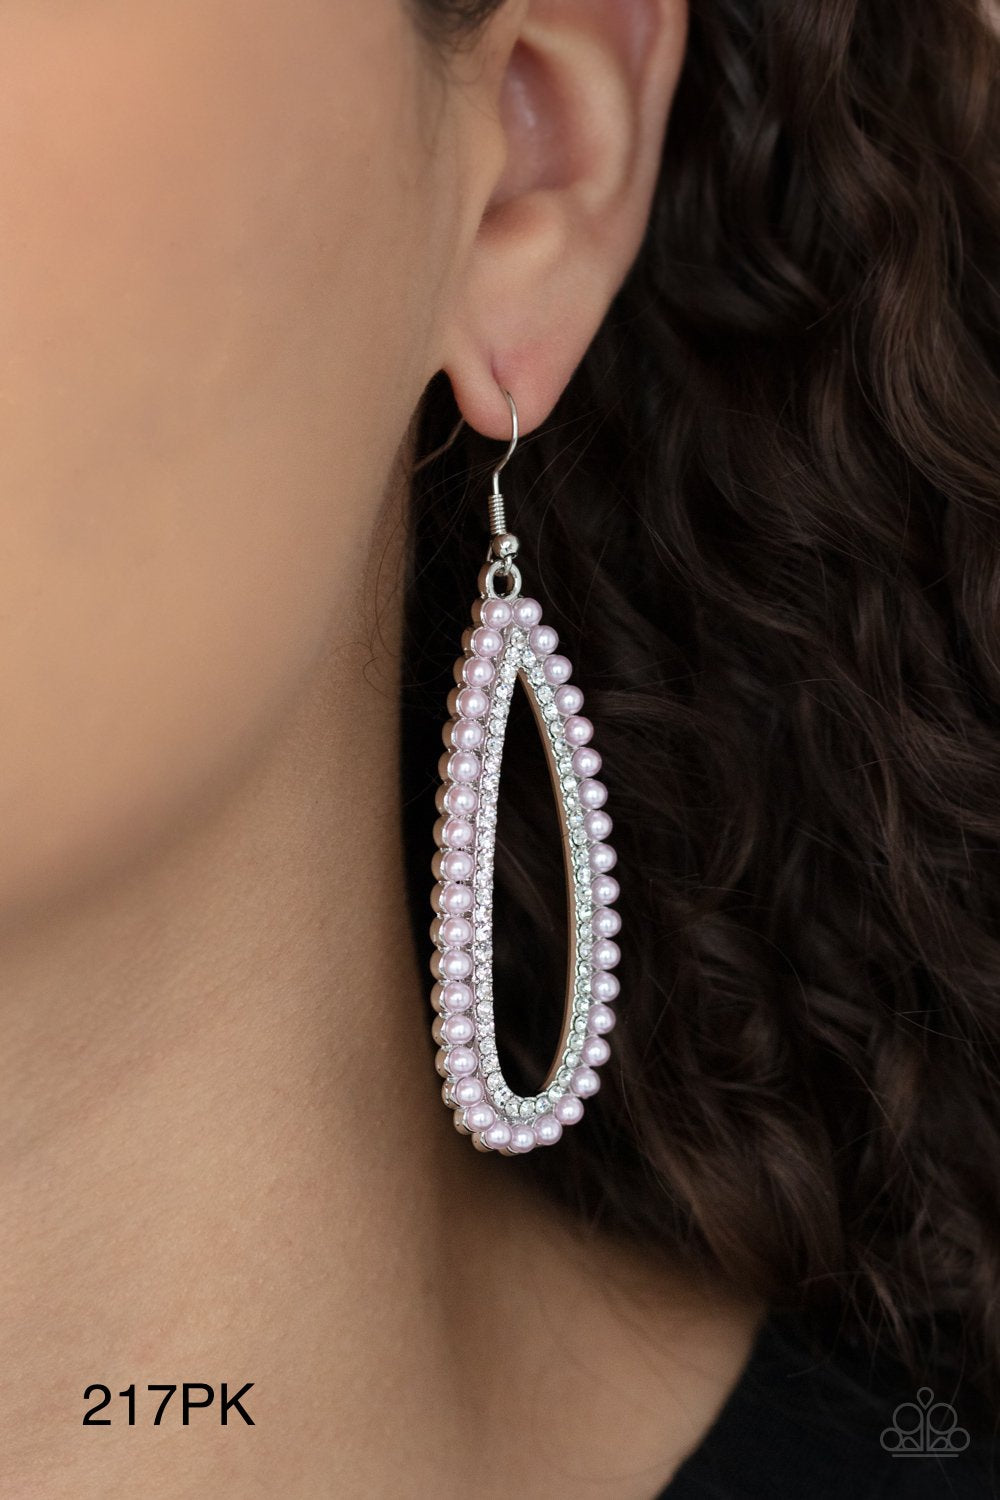 Paparazzi “Glamorously Glowing” Pink Dangle Earrings